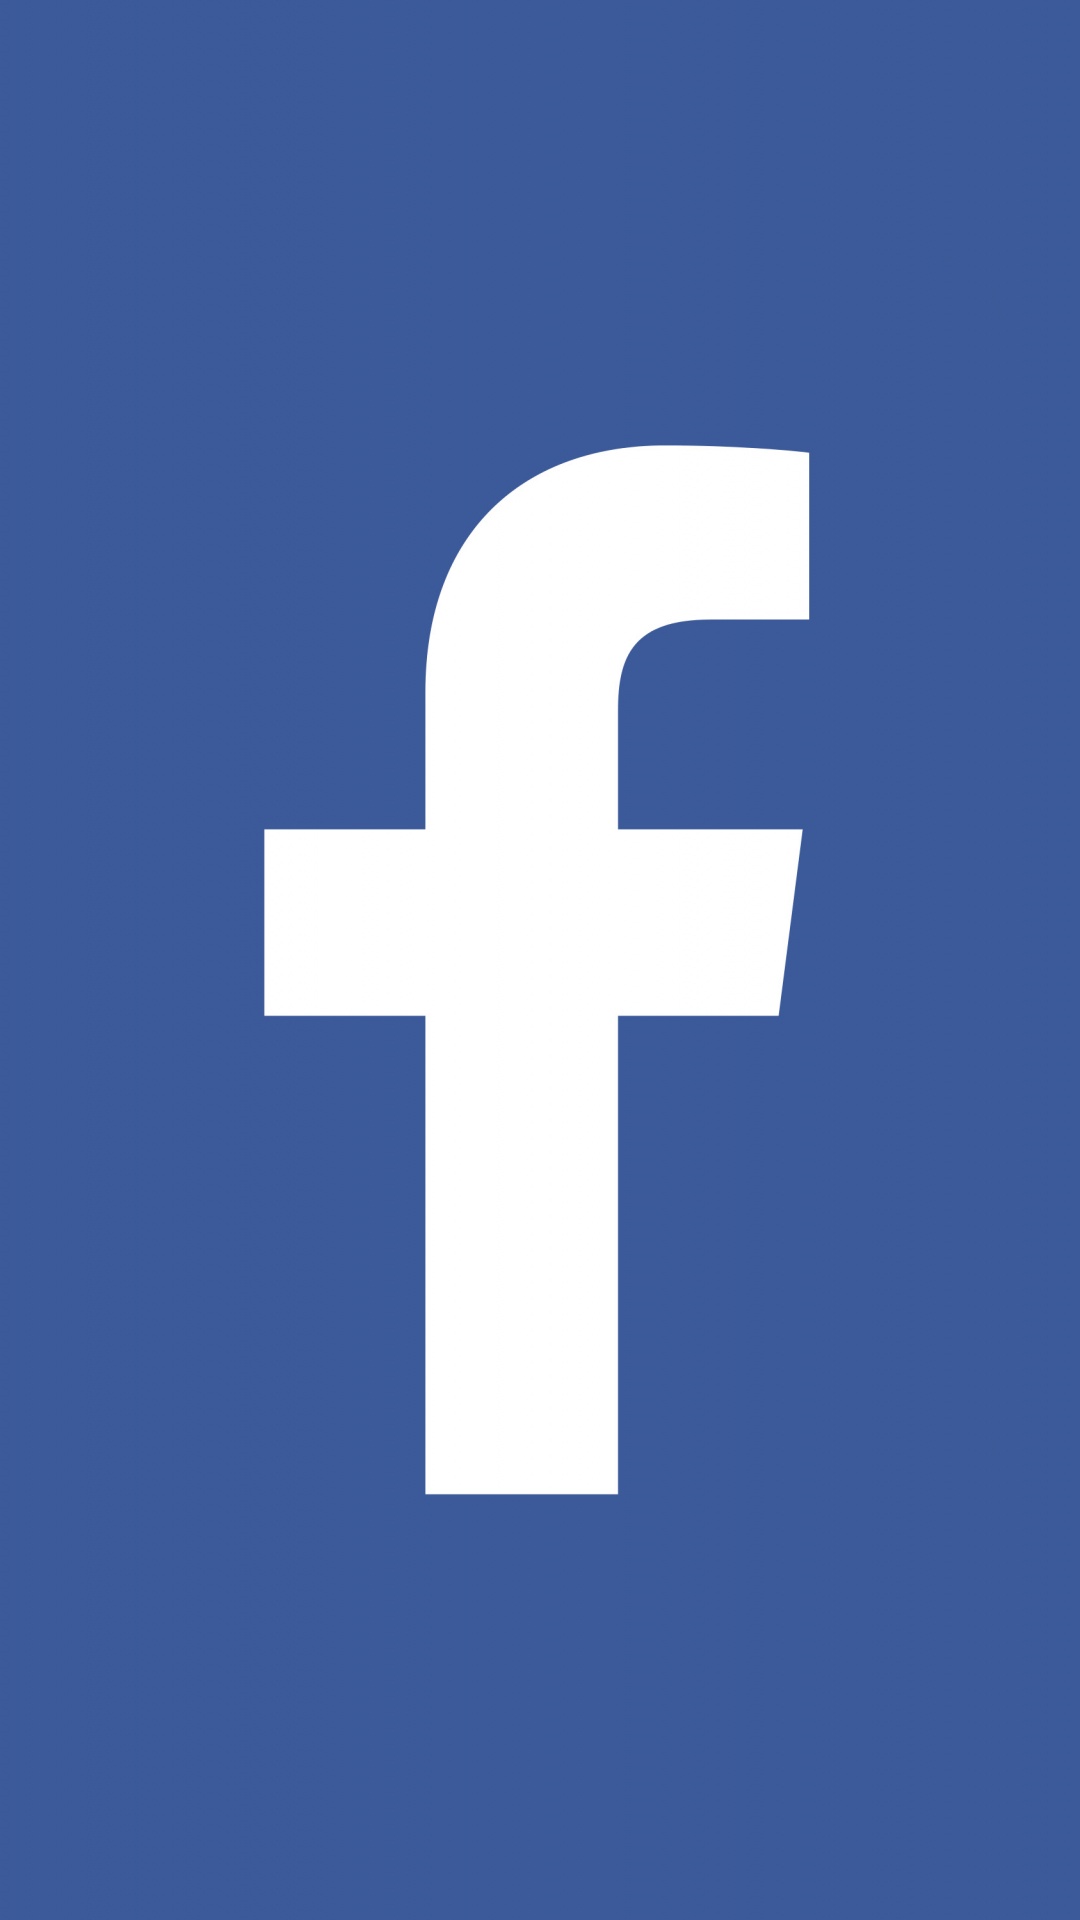 Facebook, Firmenzeichen, Text, Brand, Social-Media-Manager. Wallpaper in 1080x1920 Resolution